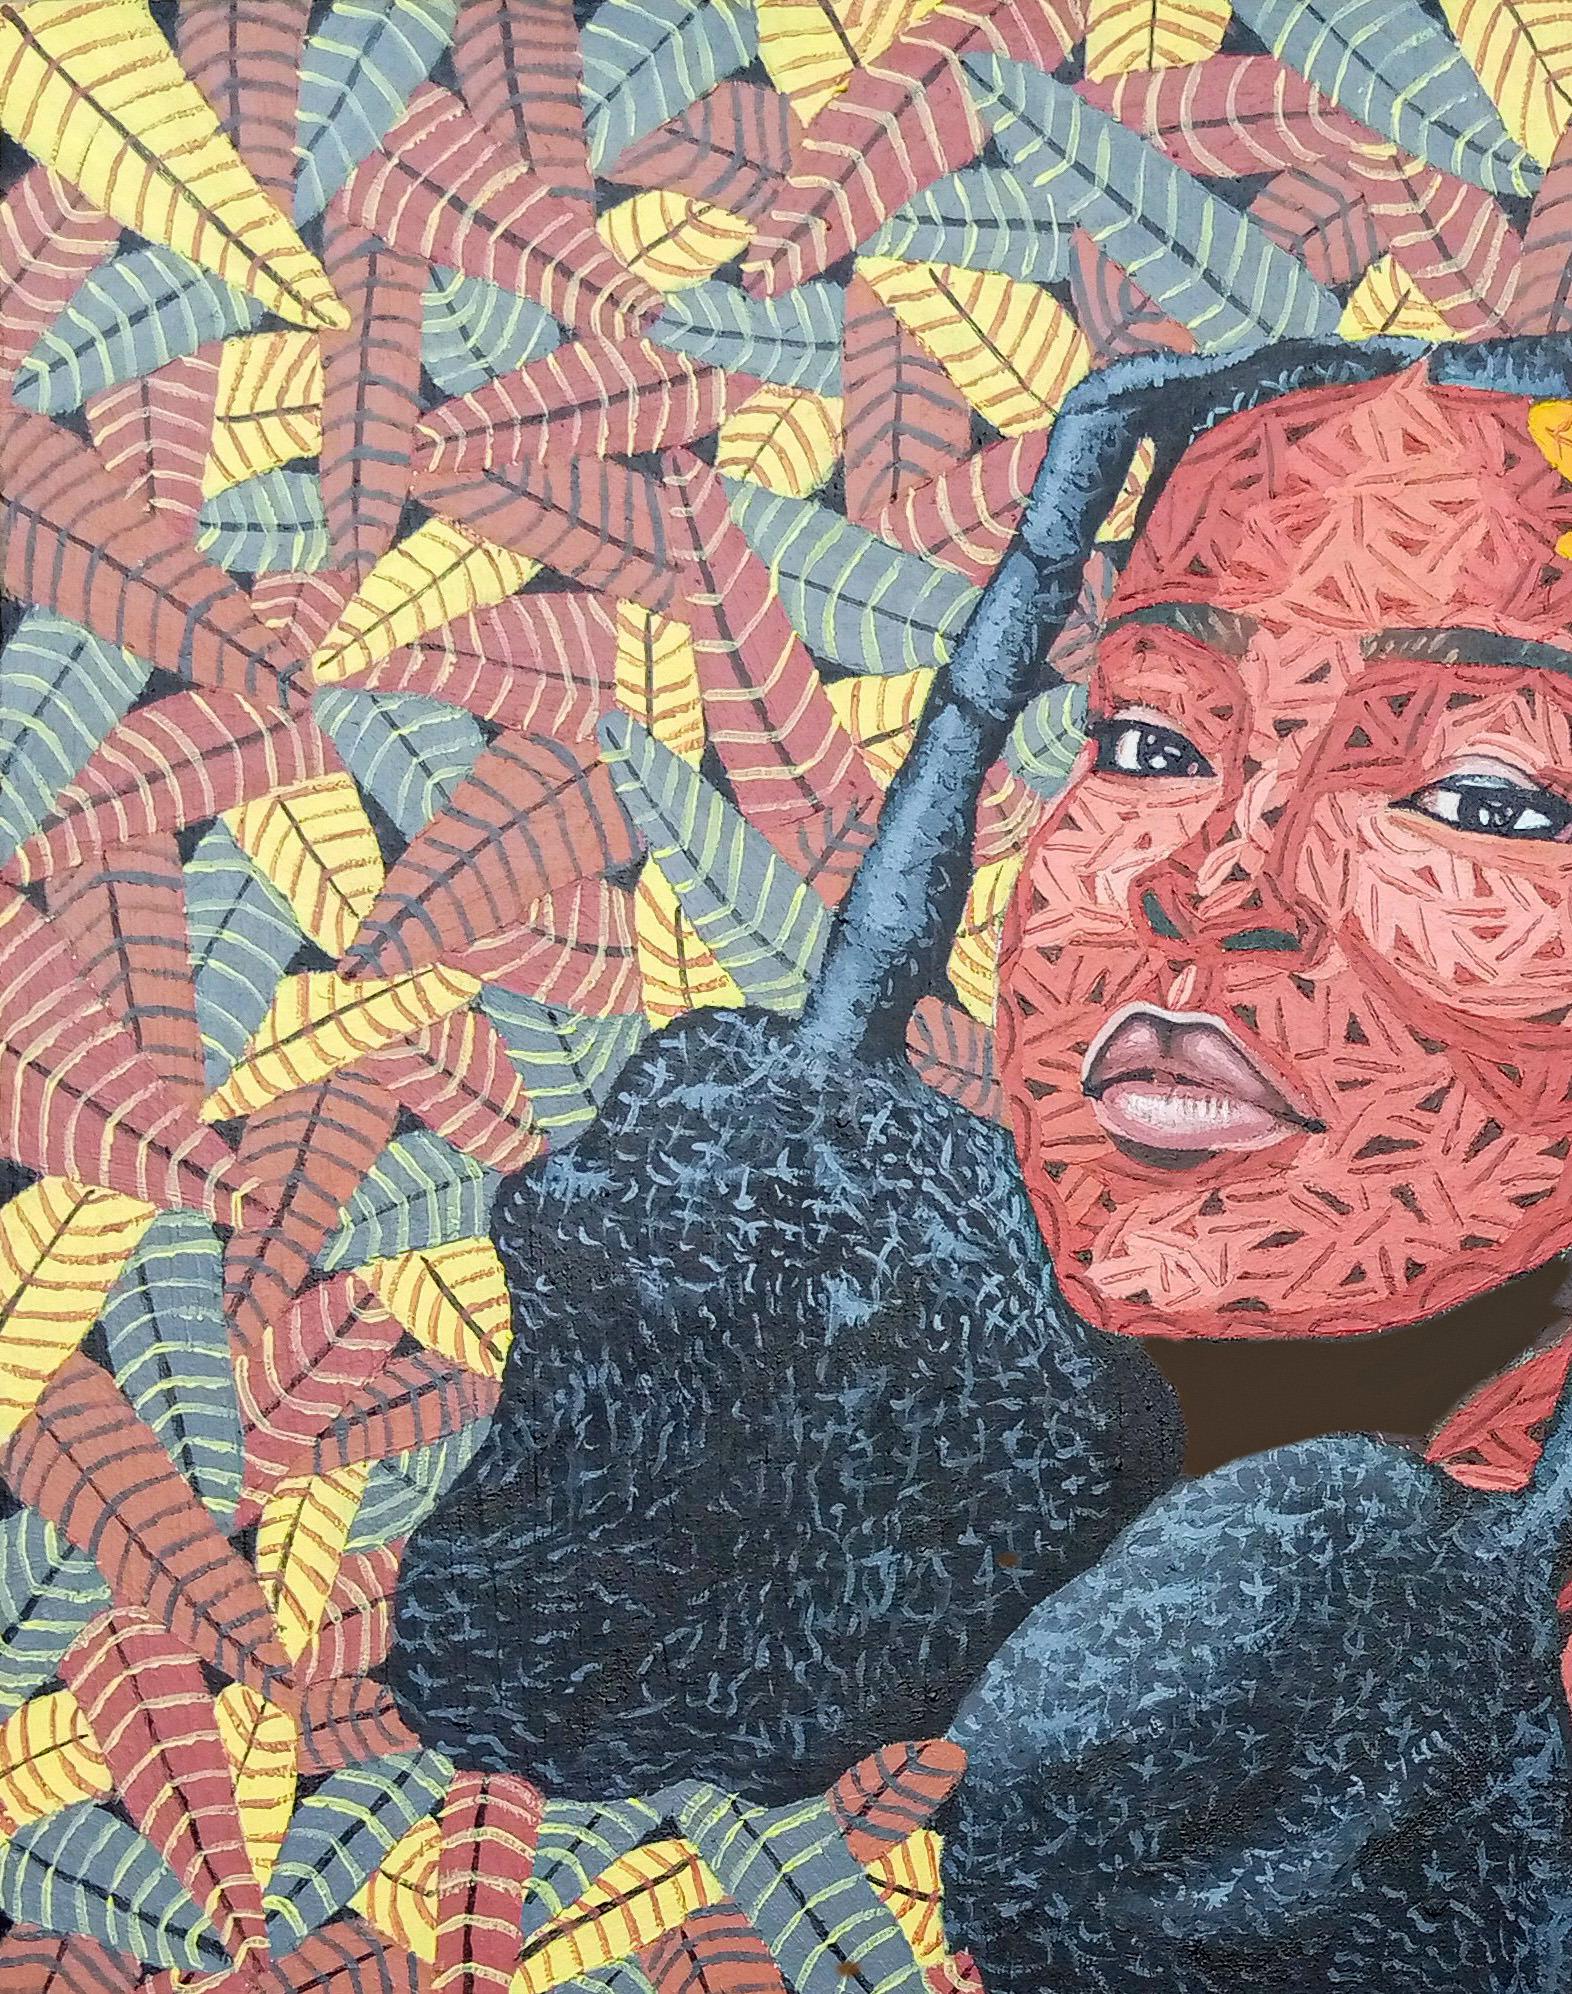 Serenity - Painting by Desmond Akindoju